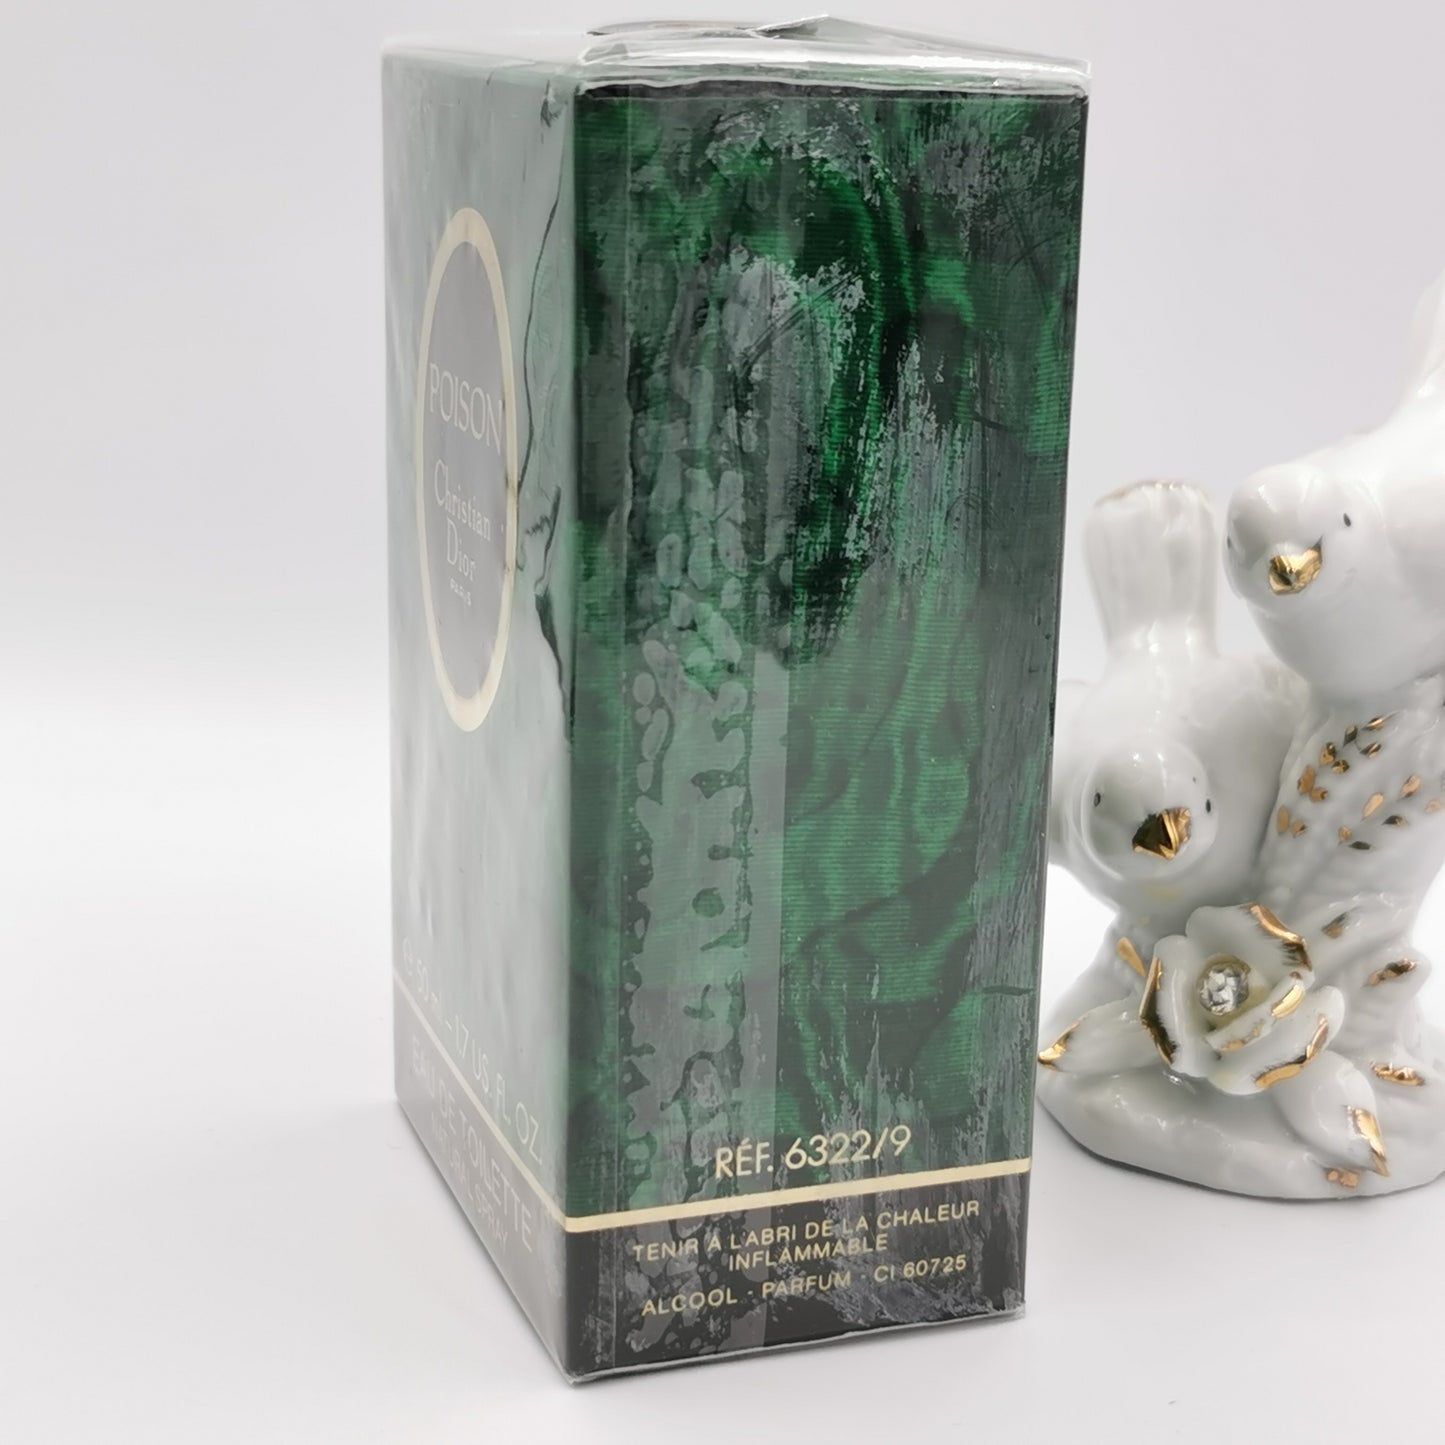 Poison by Christian Dior 50ml EDT Spray VINTAGE SEALED